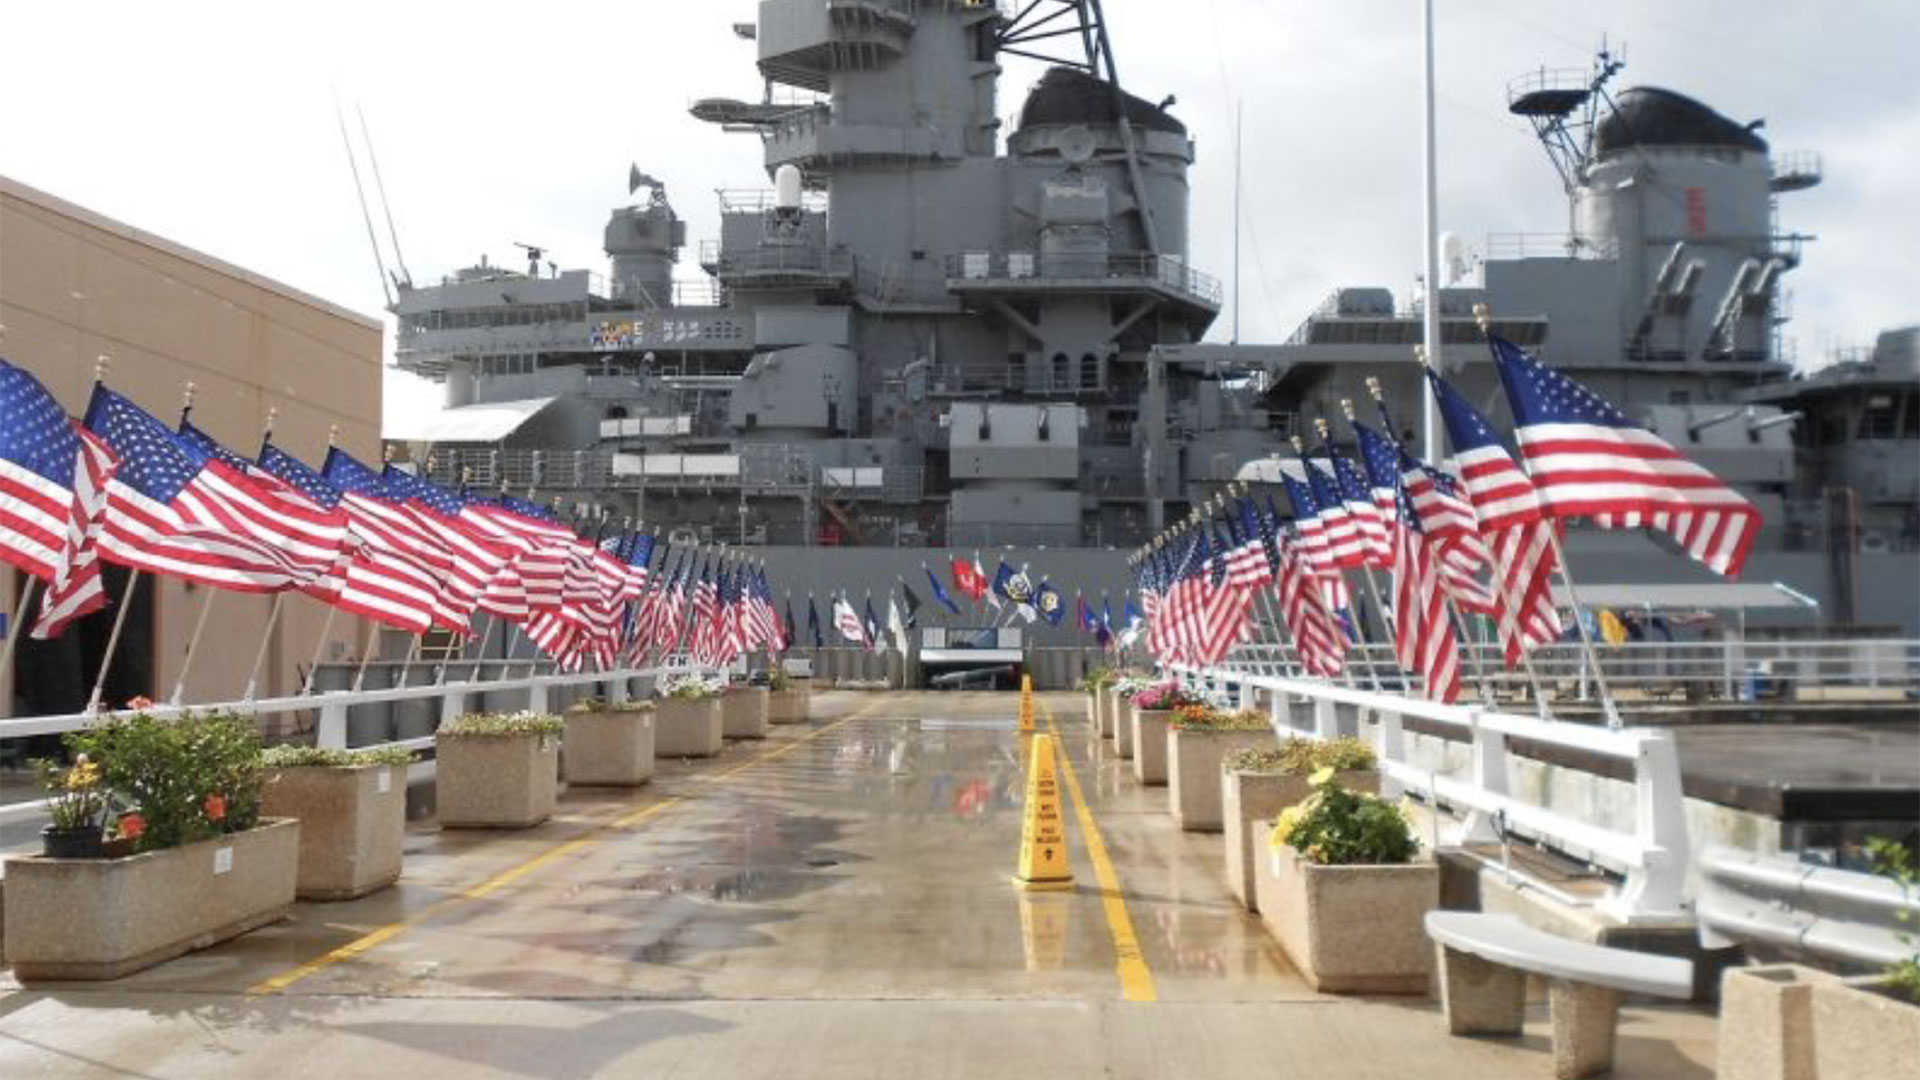 USS Arizona Memorial & Battleship Missouri in Pearl Harbor 04